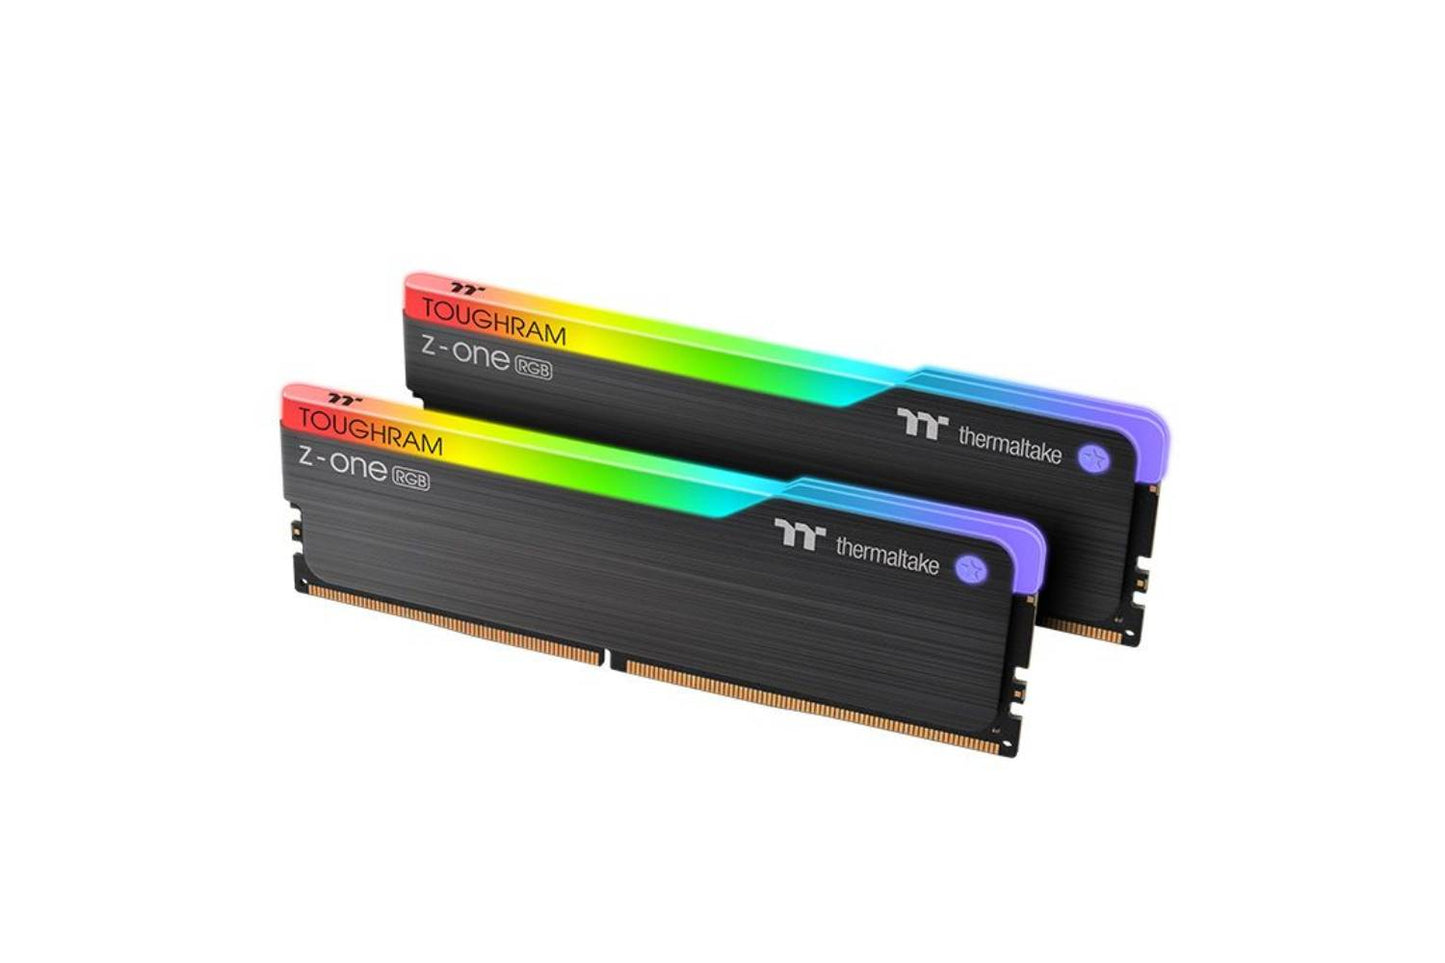 Thermaltake TOUGHRAM Z-ONE RGB Memory DDR4 3200MHz 16GB (8GB x 2) RAM